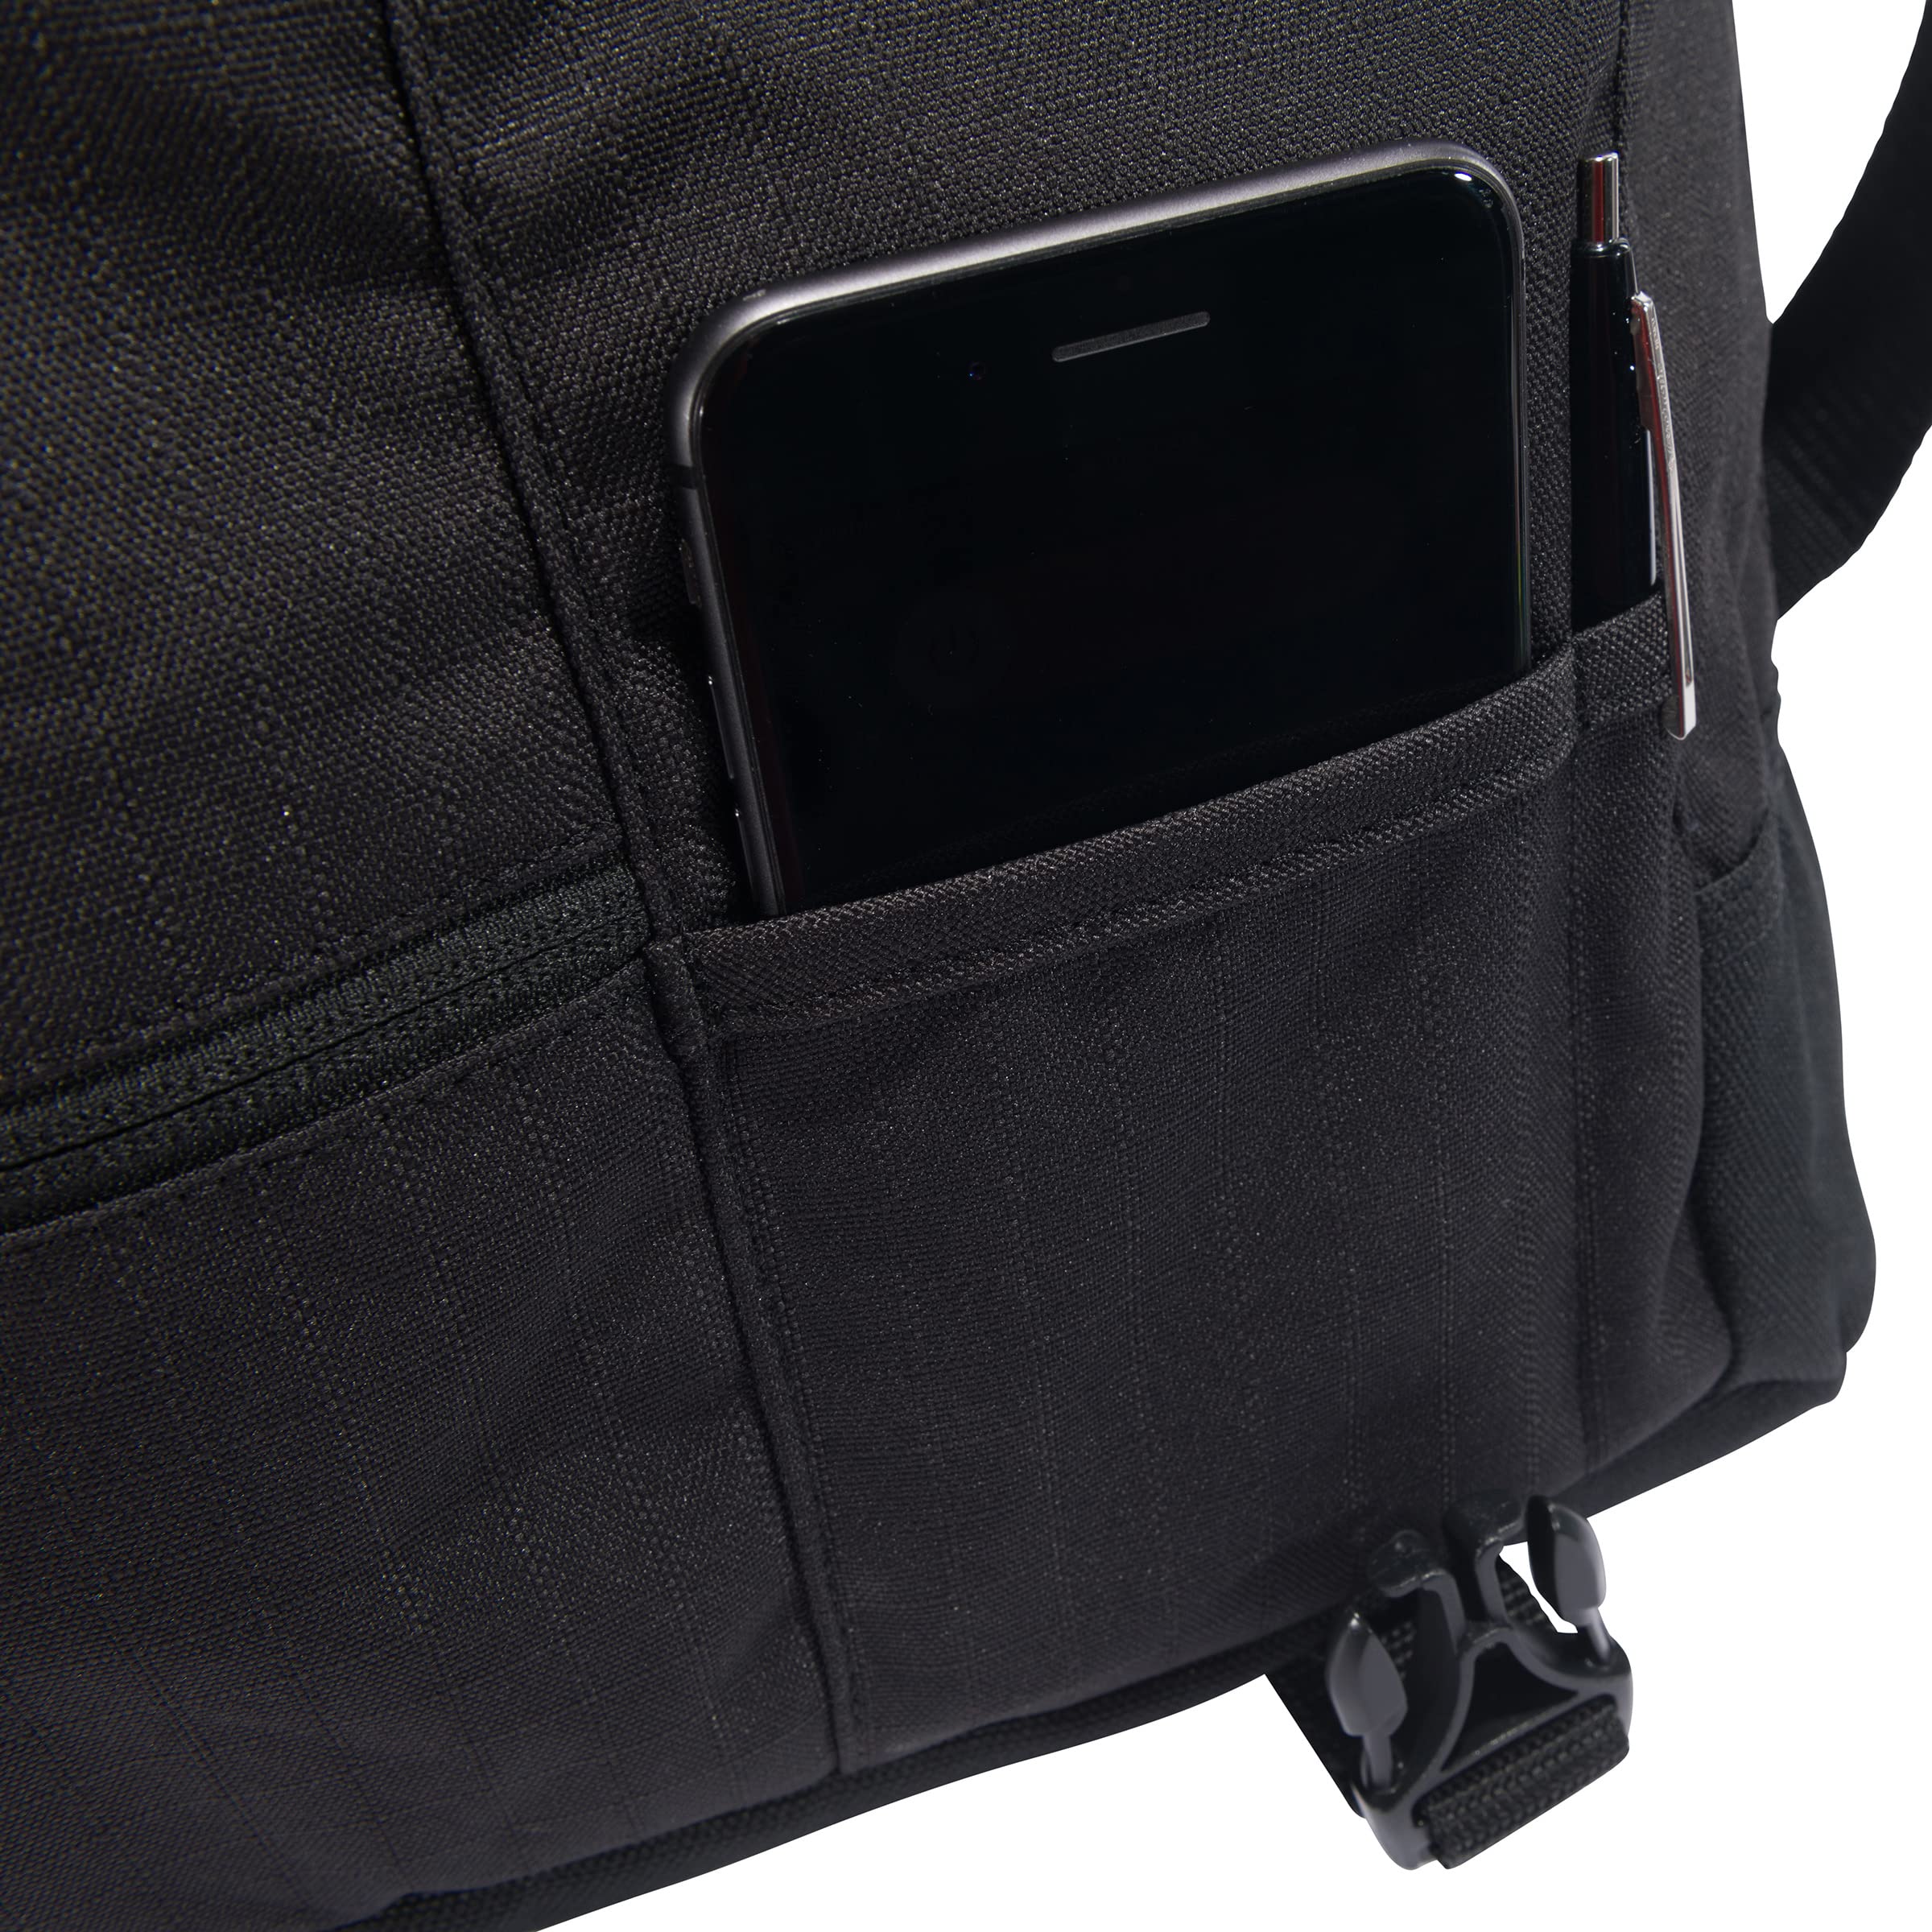 Carhartt Ripstop Messenger Bag, Durable Water-Resistant Messenger Work Bag, Black